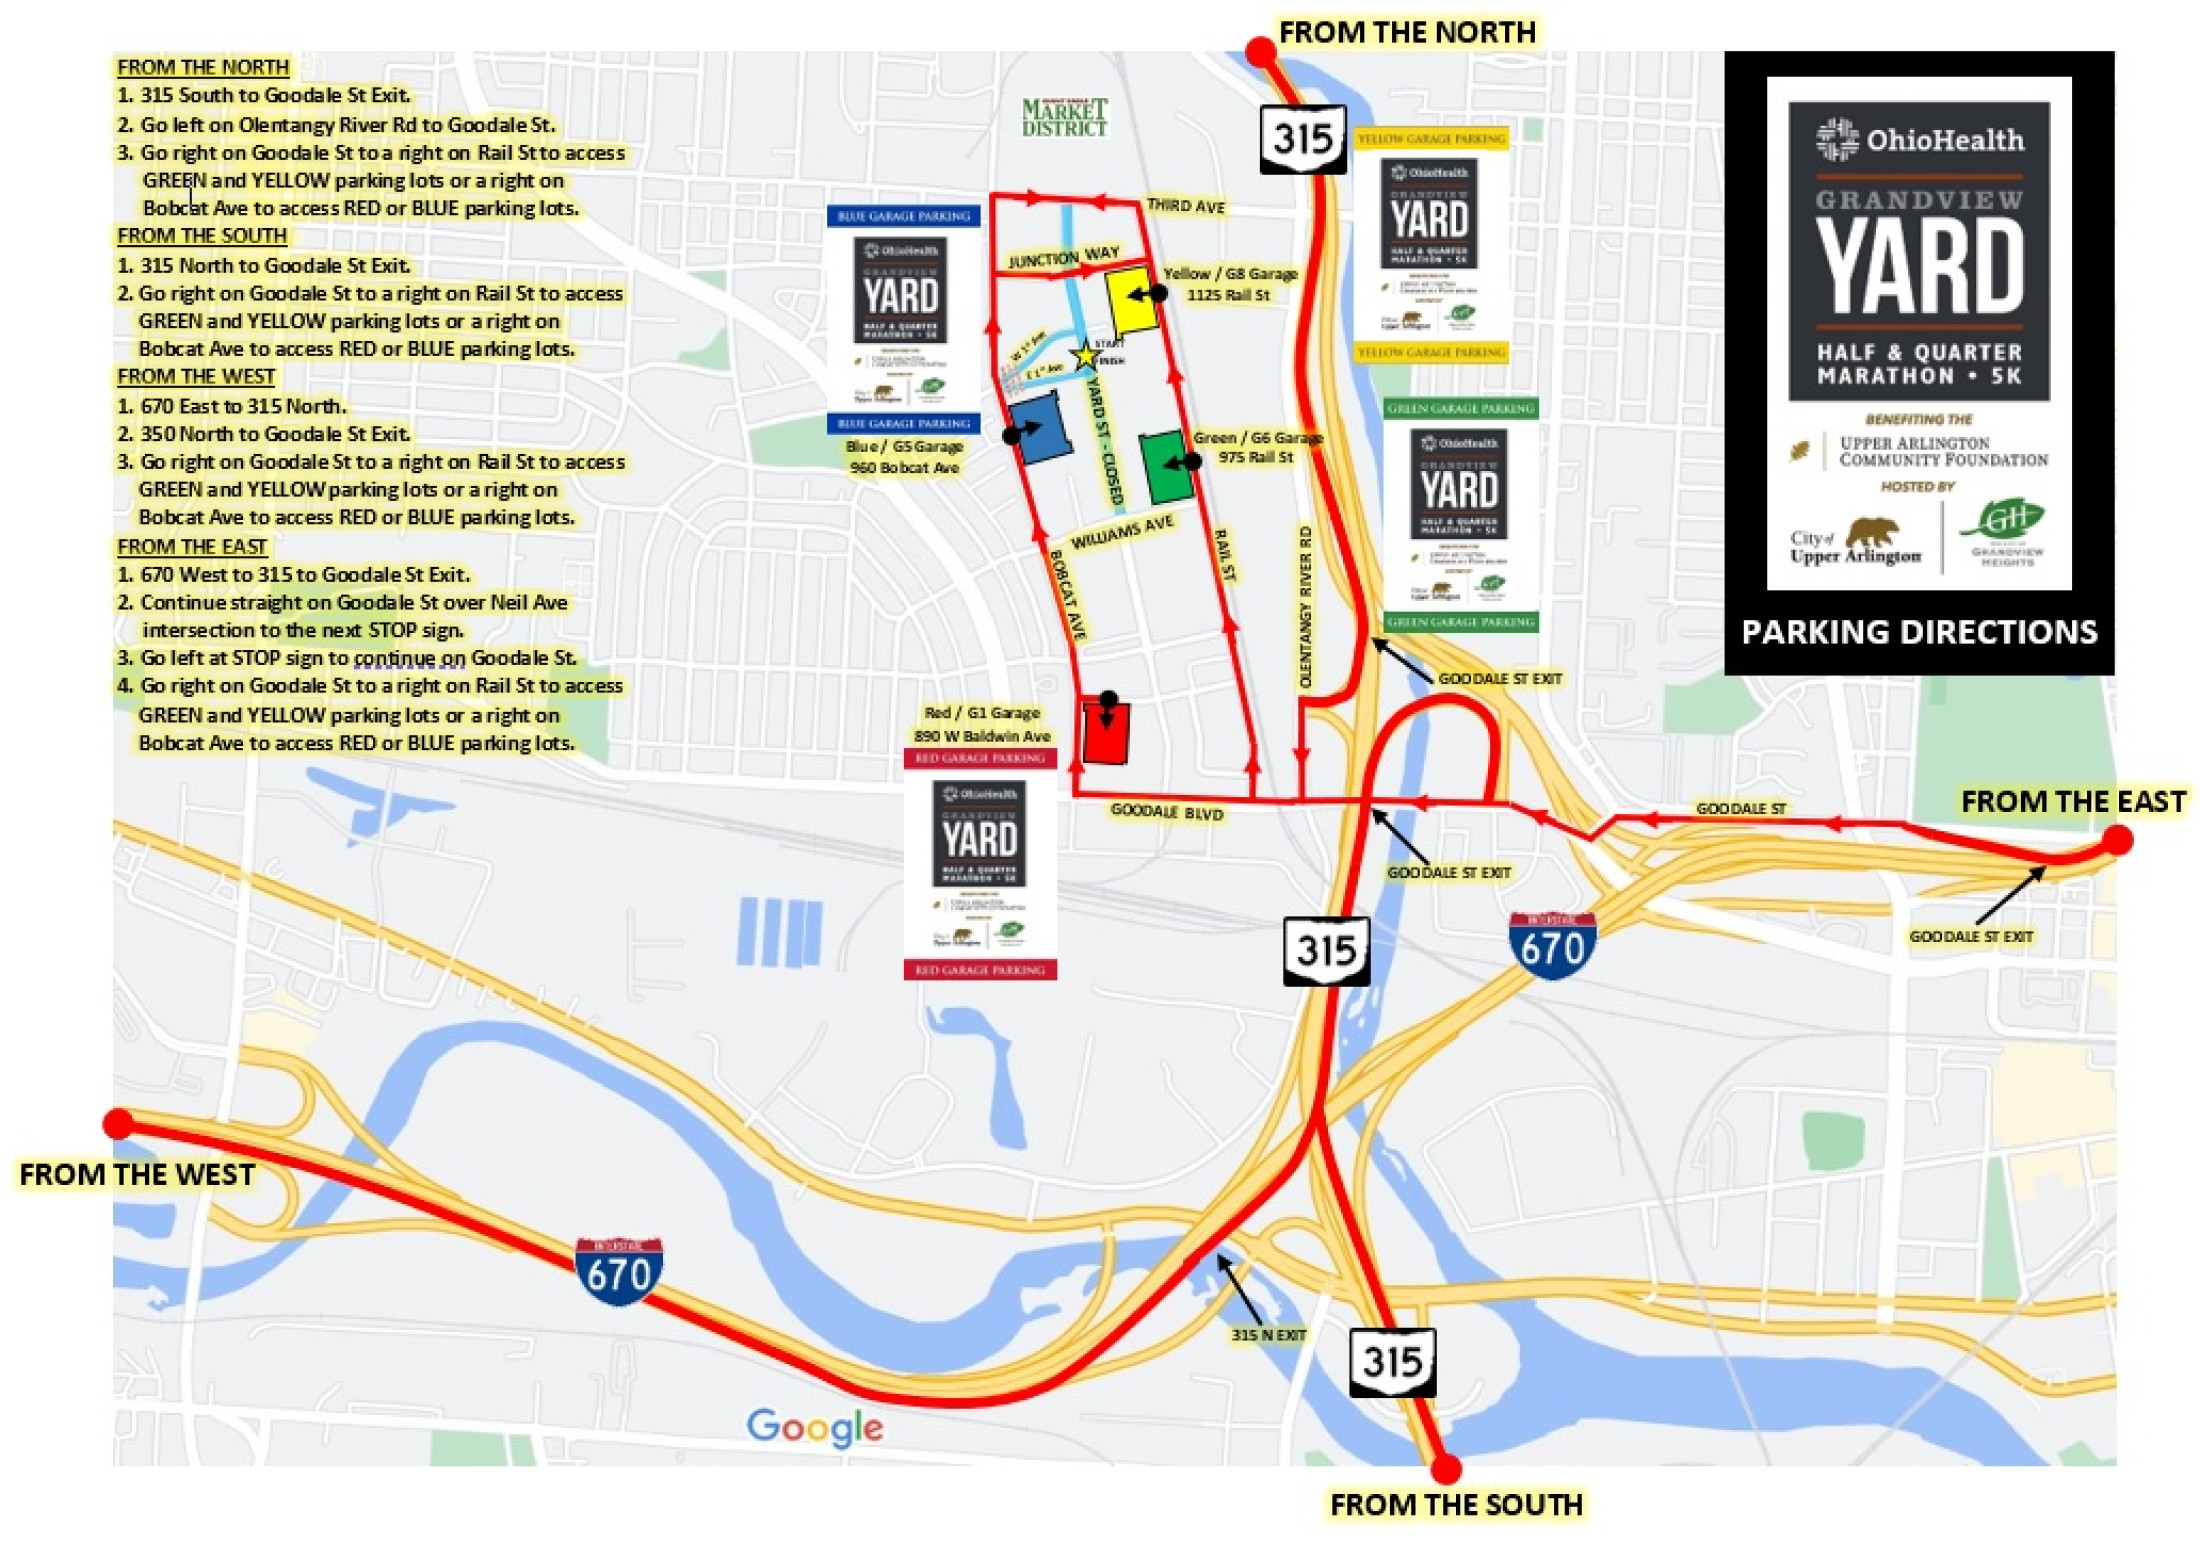 Parking Map » OhioHealth Grandview Yard Half & Quarter Marathon